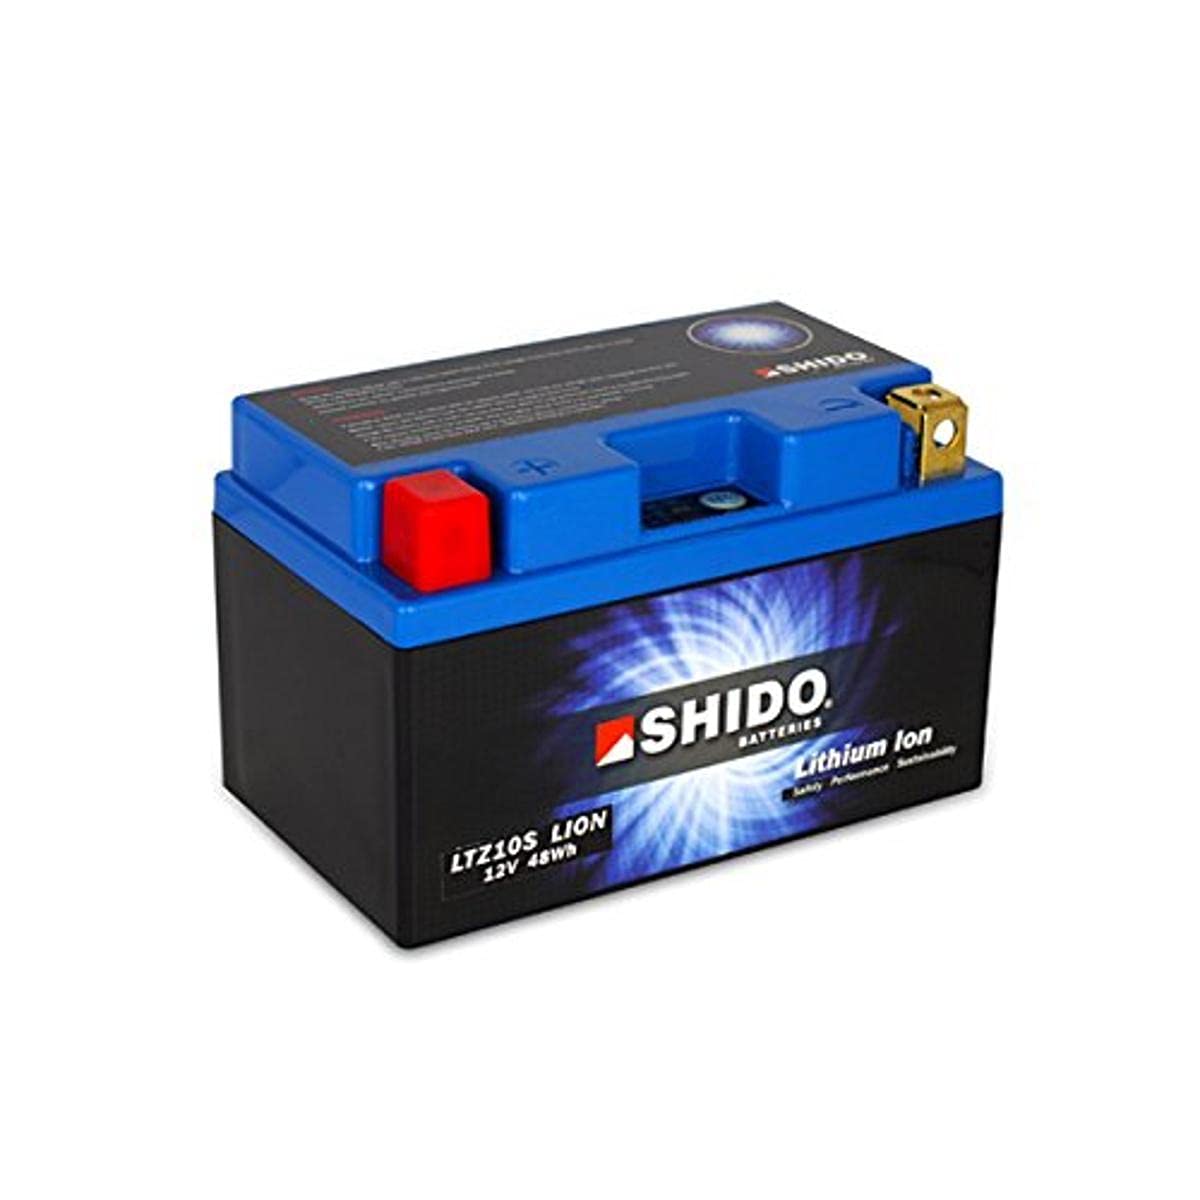 SHIDO LTZ10S LION -S- Batterie Lithium, Ion Blau (Preis inkl. EUR 7,50 Pfand) von SHIDO